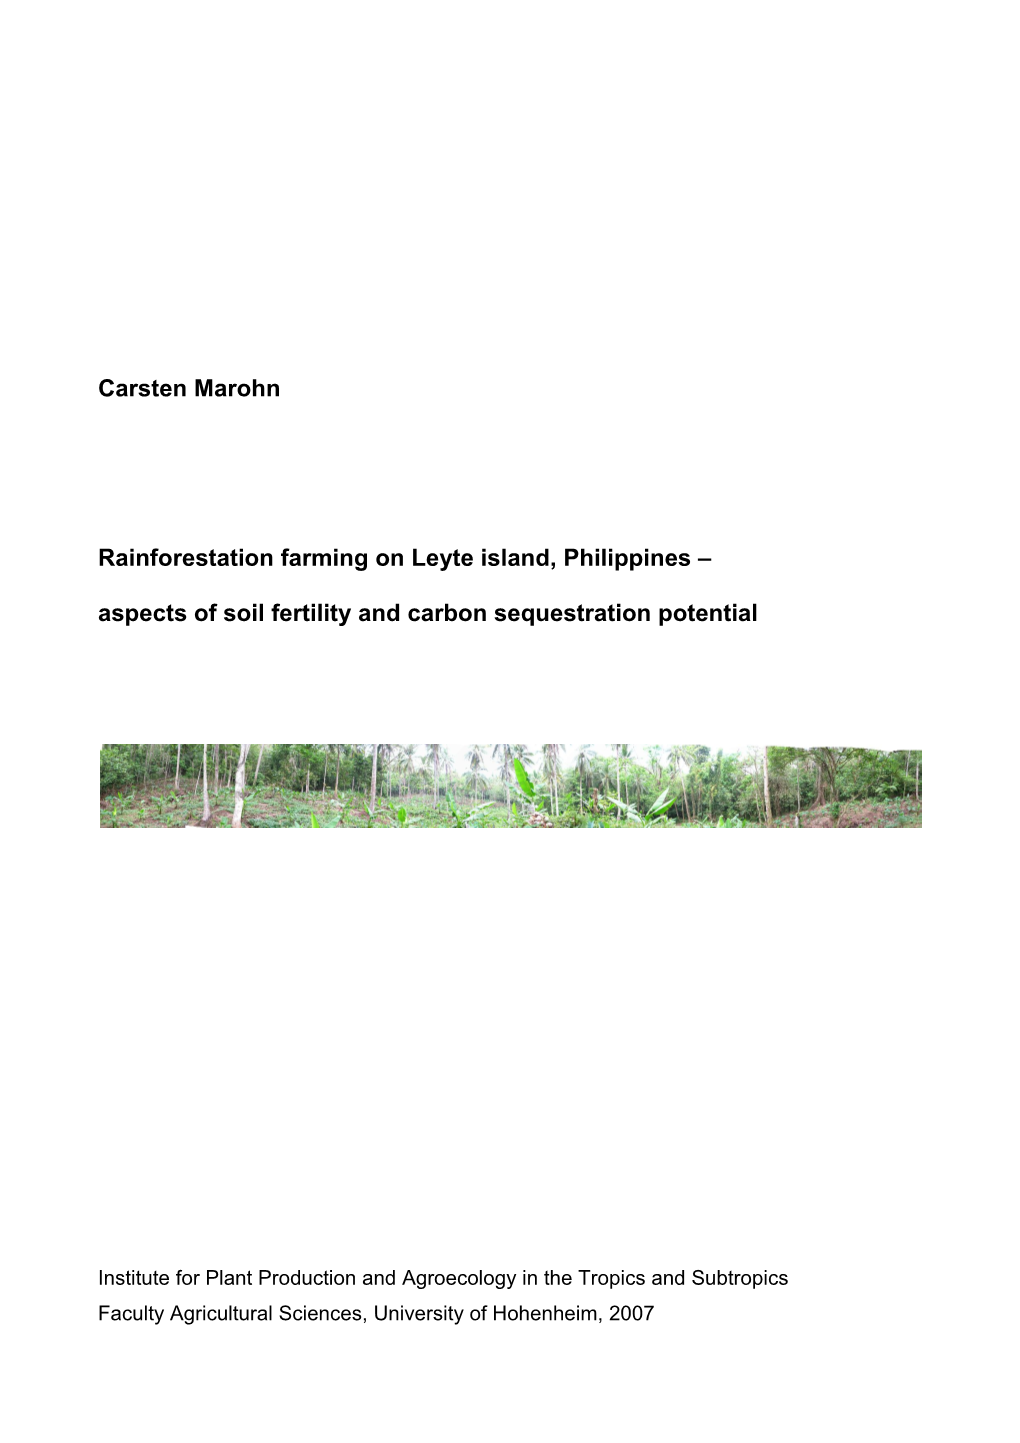 Carsten Marohn Rainforestation Farming on Leyte Island, Philippines